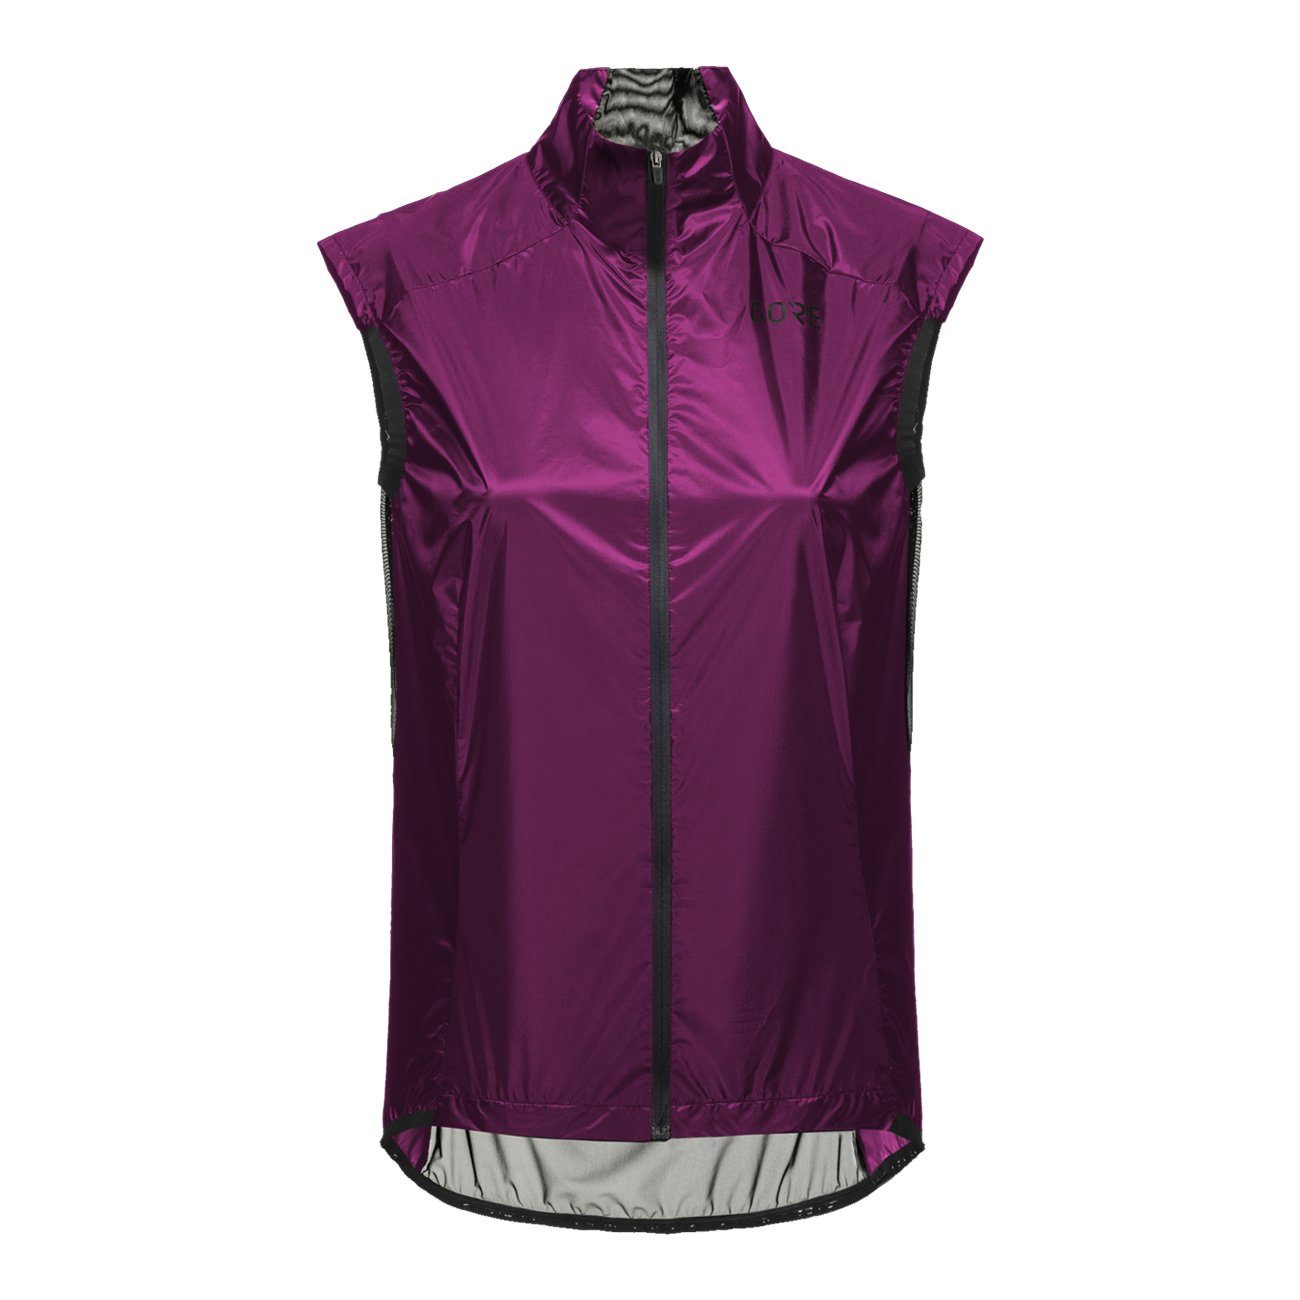 GORE® Wear Gore Wear Ambient Vest Damen Process Purple Black Outdoorschuh